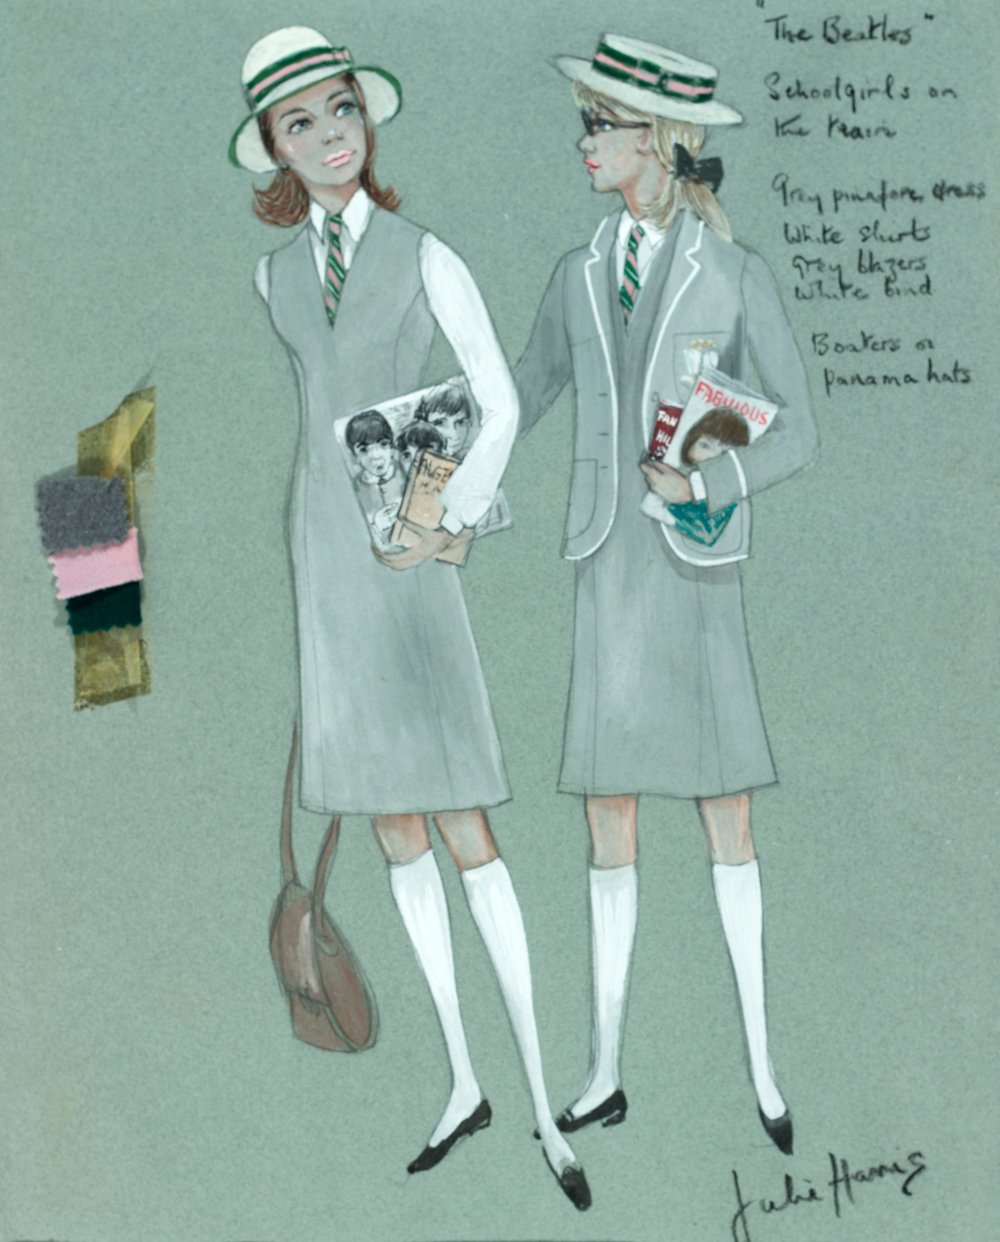 hard-days-night-a-1964-015-costume-design-for-school-girls-on-the-train-by-julie-harris.jpg?itok=RNhREUQR